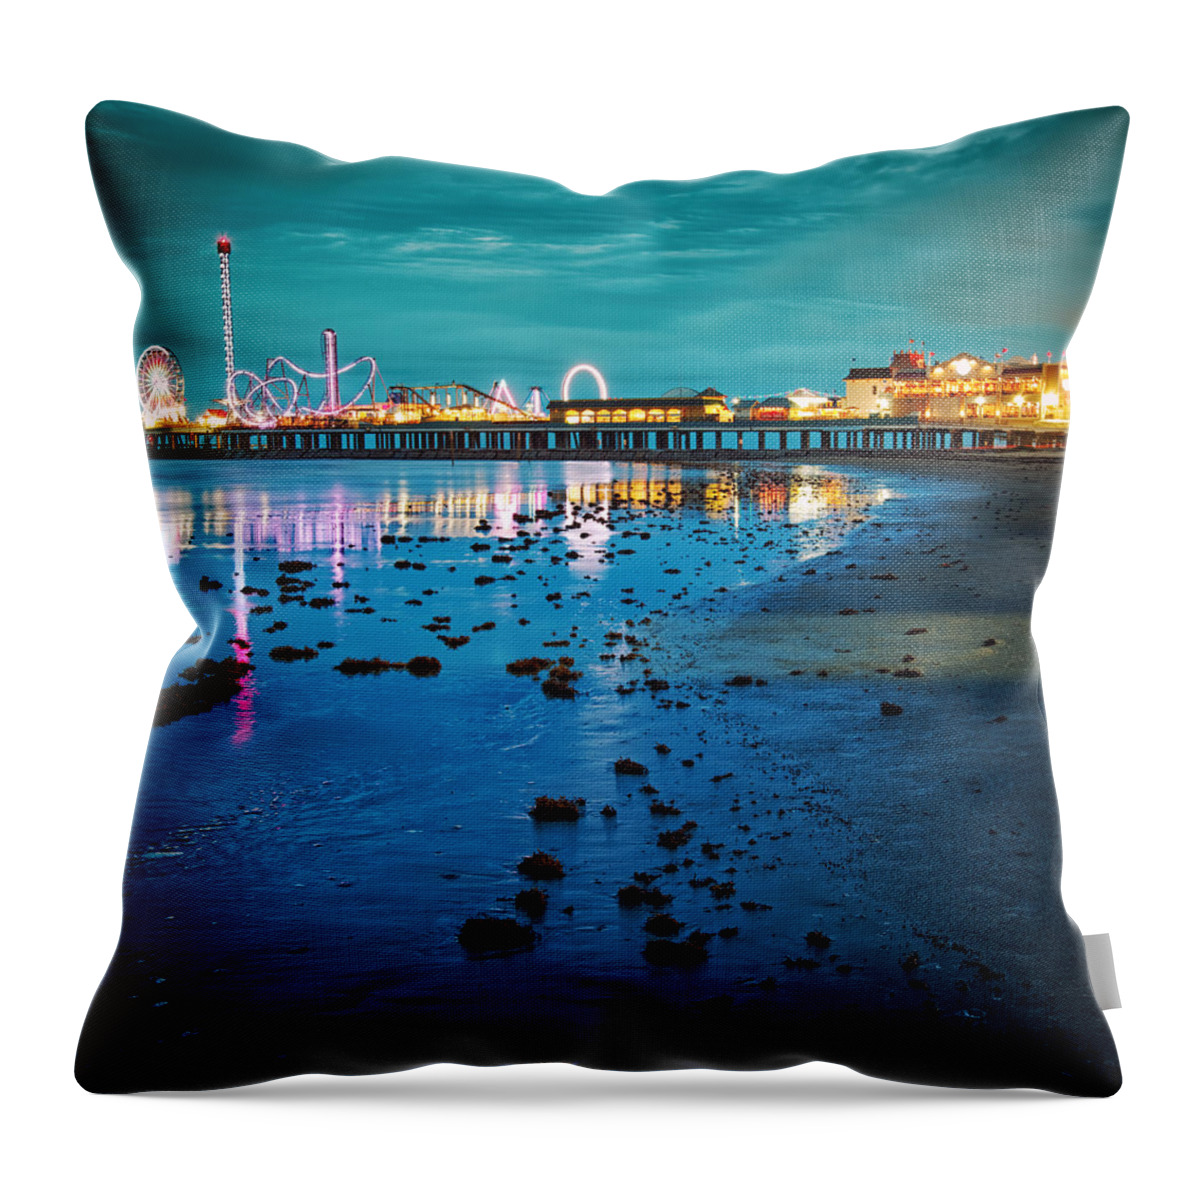 Galveston Throw Pillow featuring the photograph Vintage Pleasure Pier - Gulf Coast Galveston Texas by Silvio Ligutti